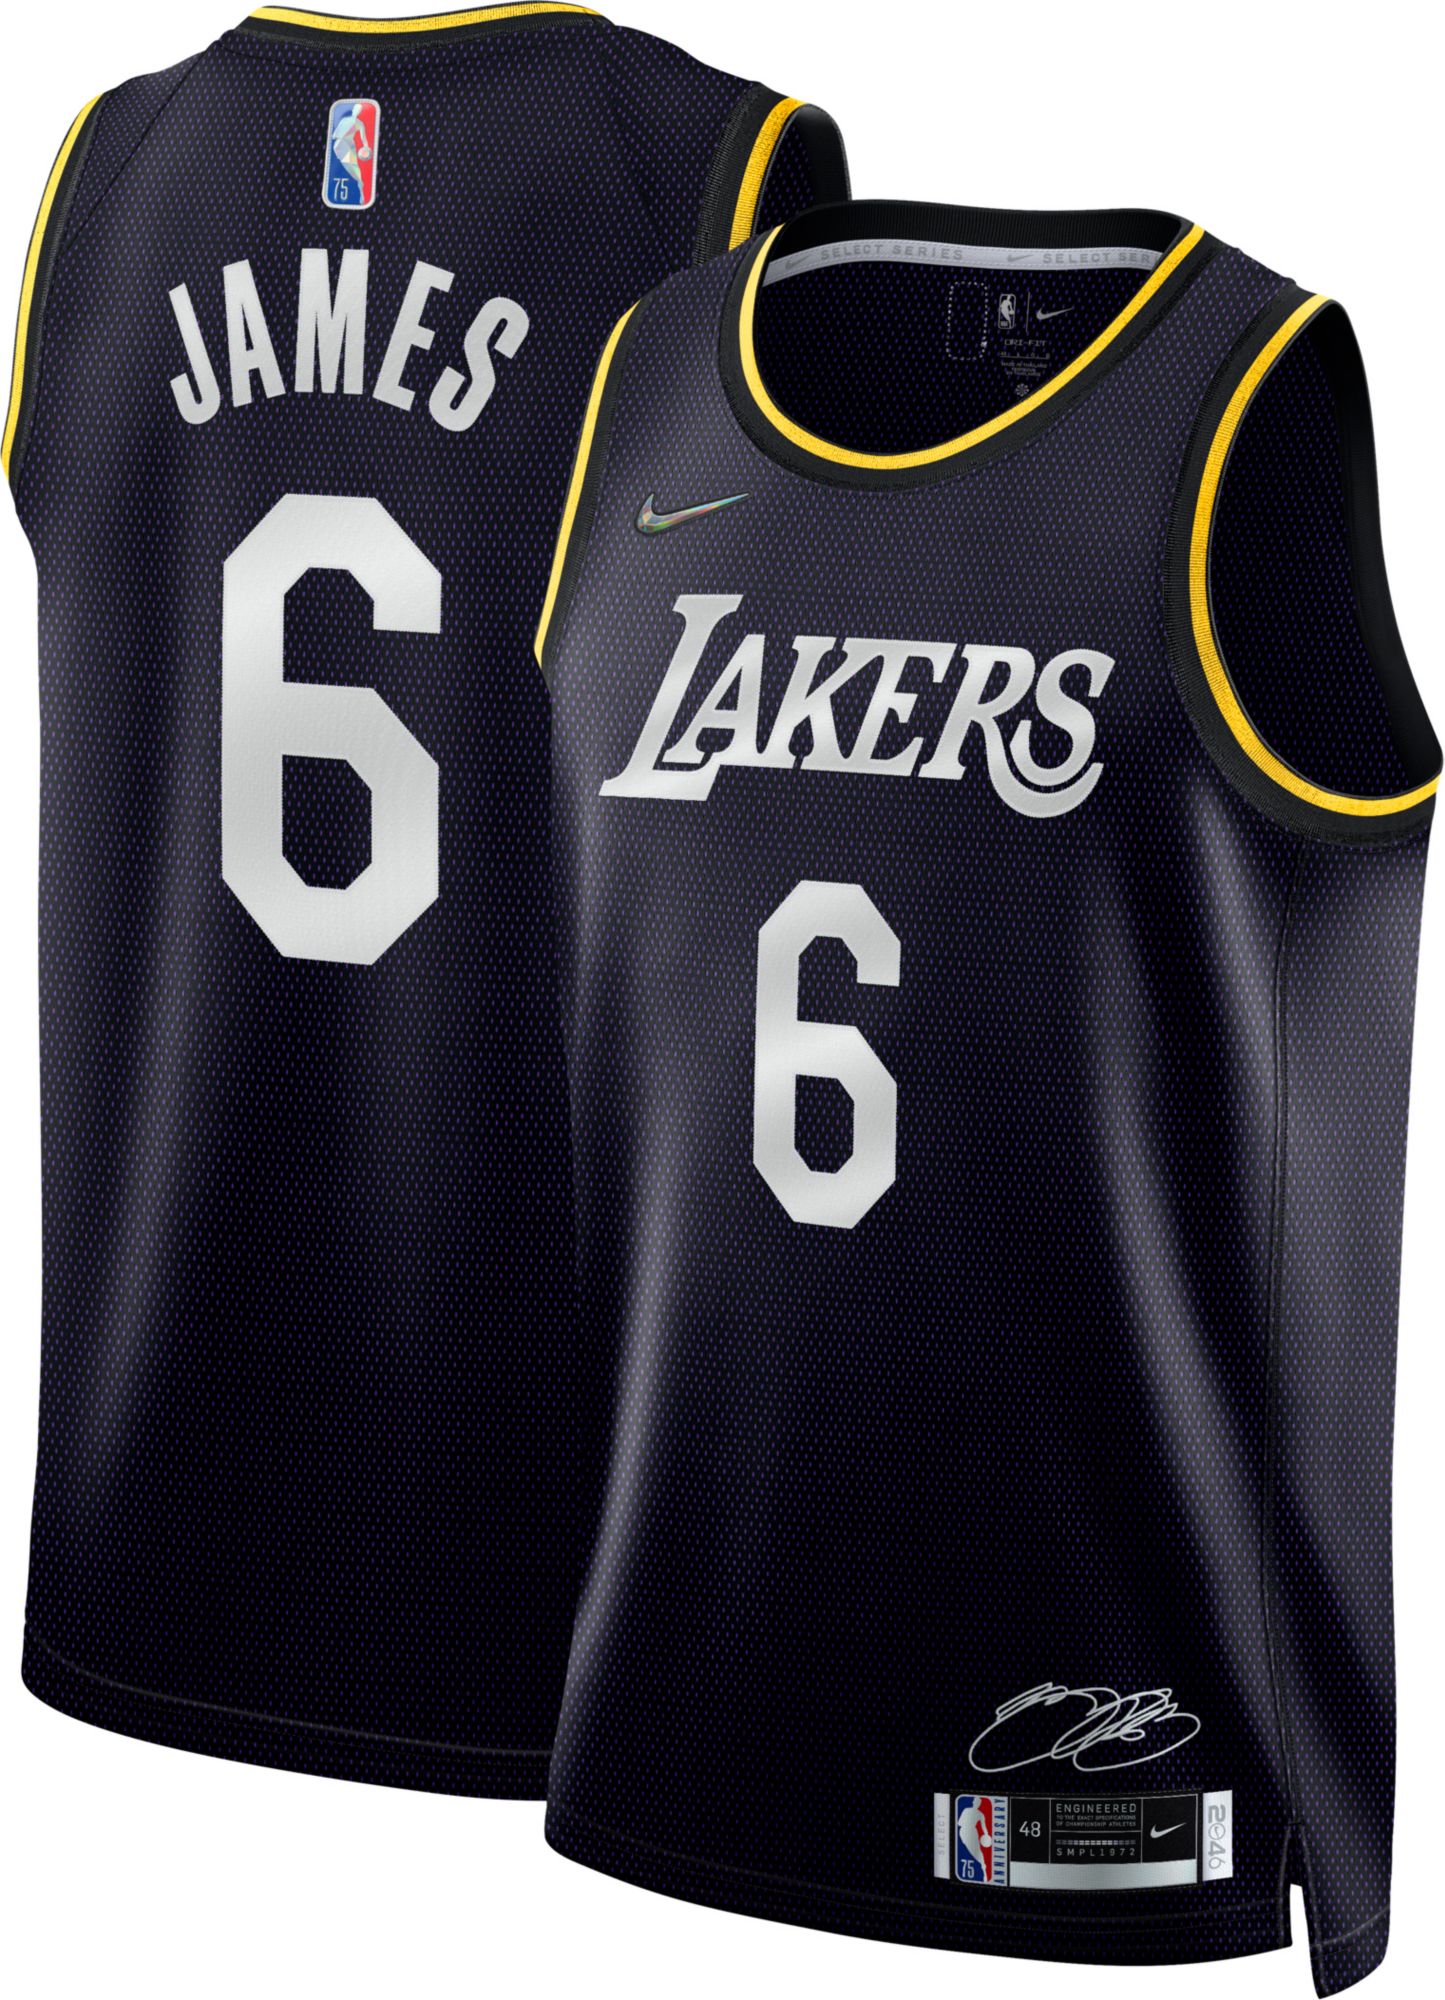 Adidas Men's International Lakers Replica Jersey